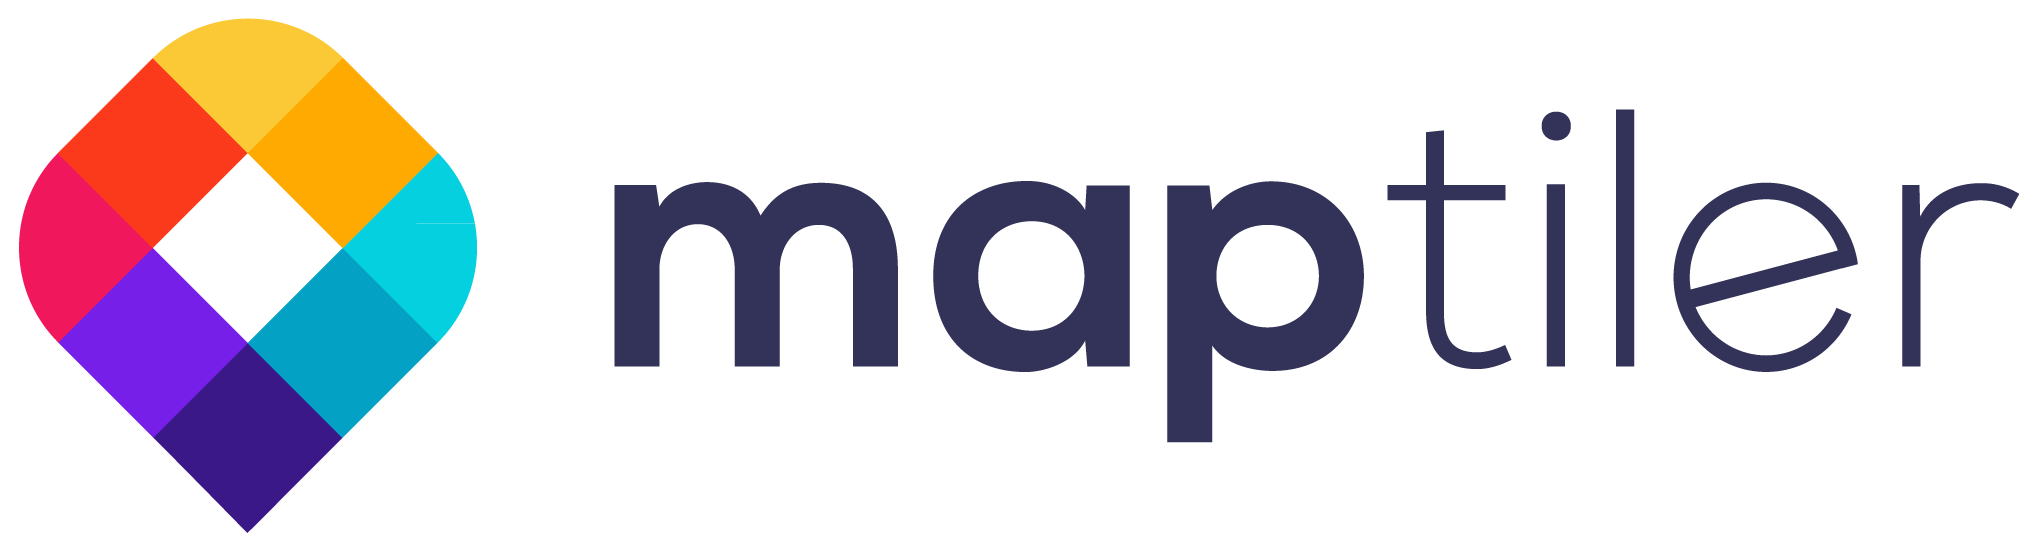 Link to Maptiler website